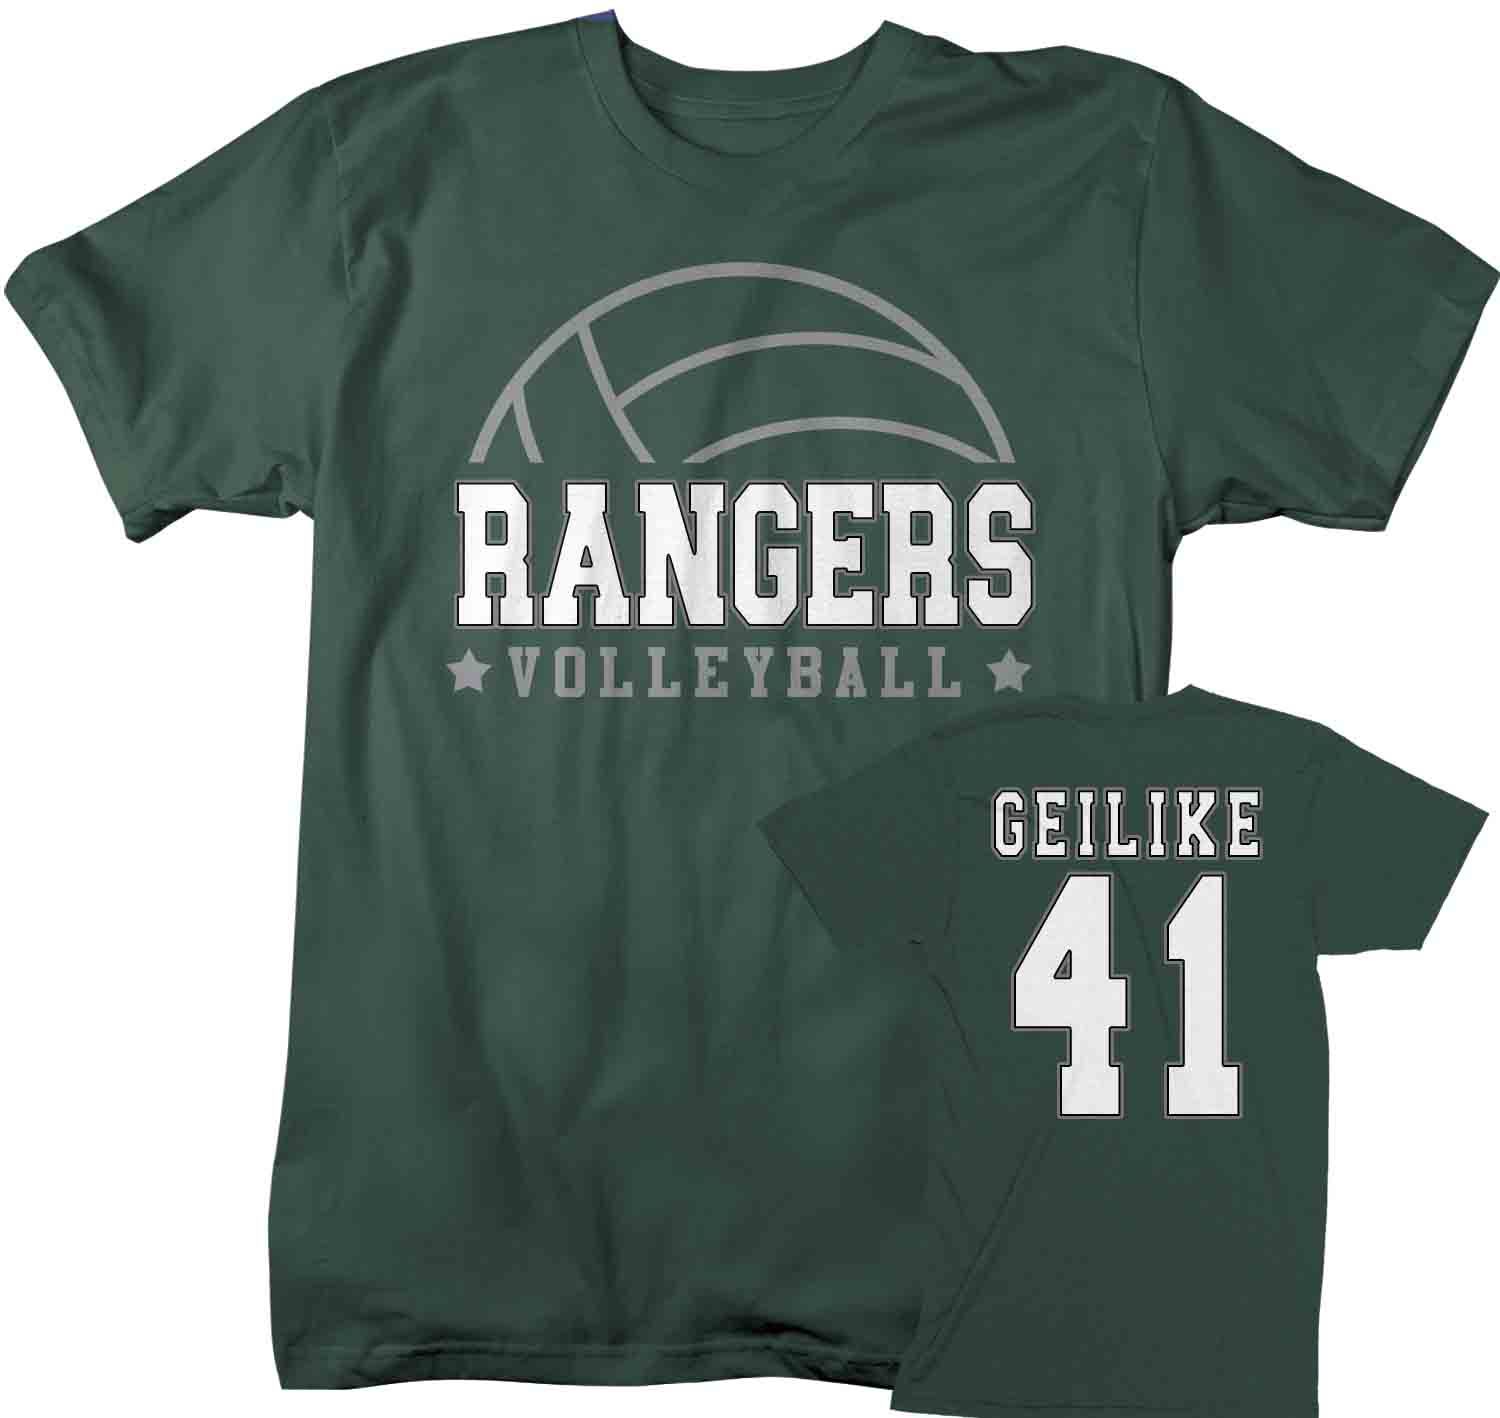 custom volleyball shirts